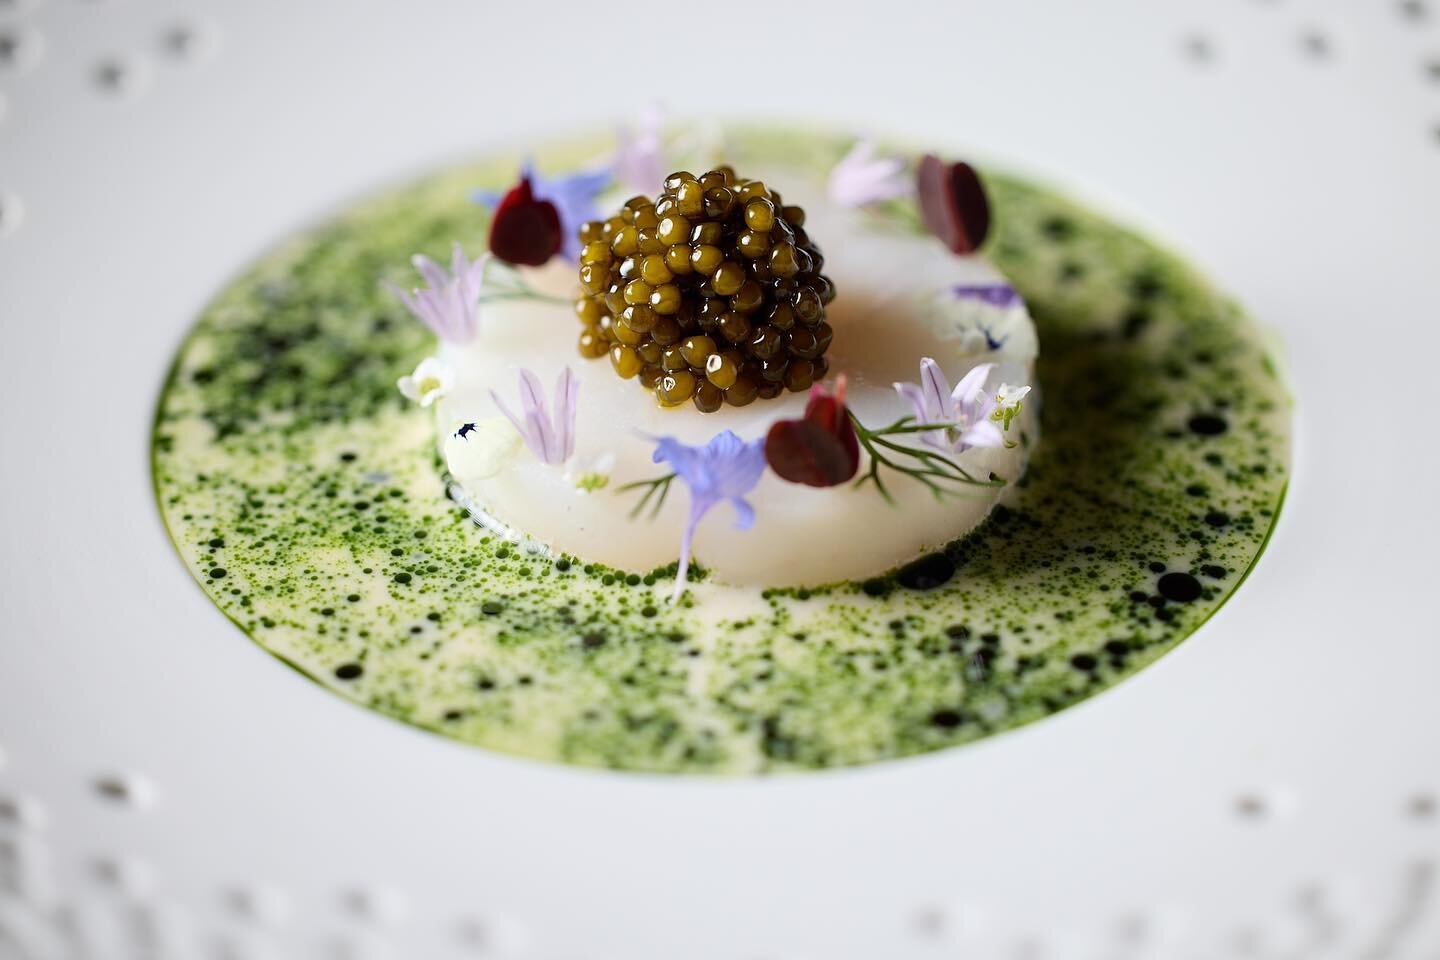 Hake dish with @royalbelgiancaviar made by @fredrikberselius @askanyc